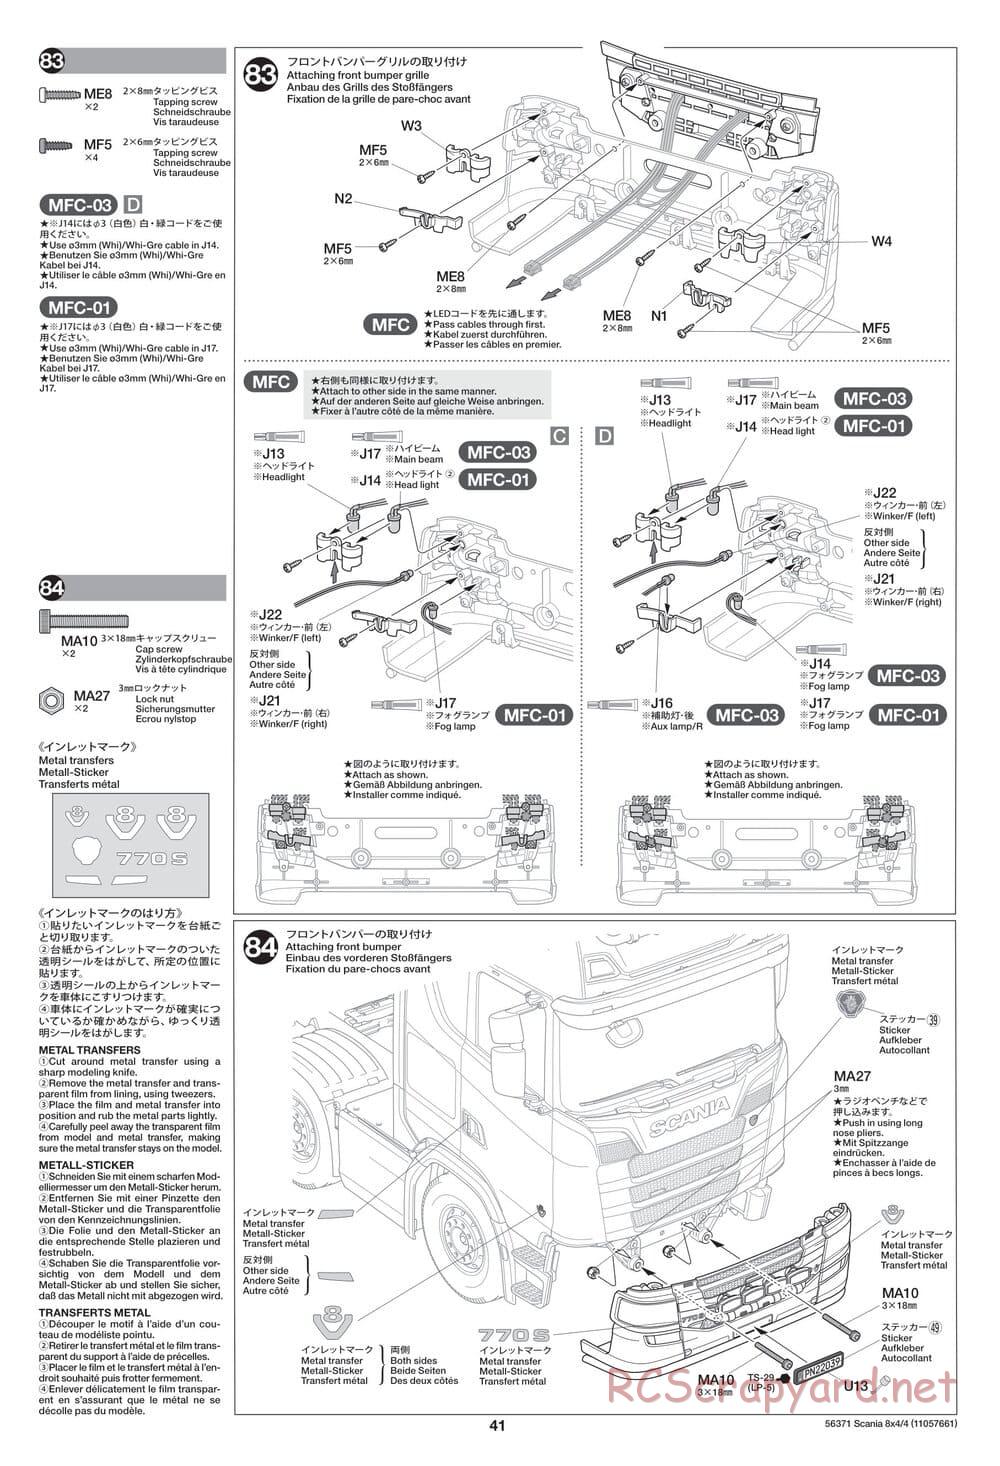 Tamiya - Scania 770 S 8x4/4 Chassis - Manual - Page 41